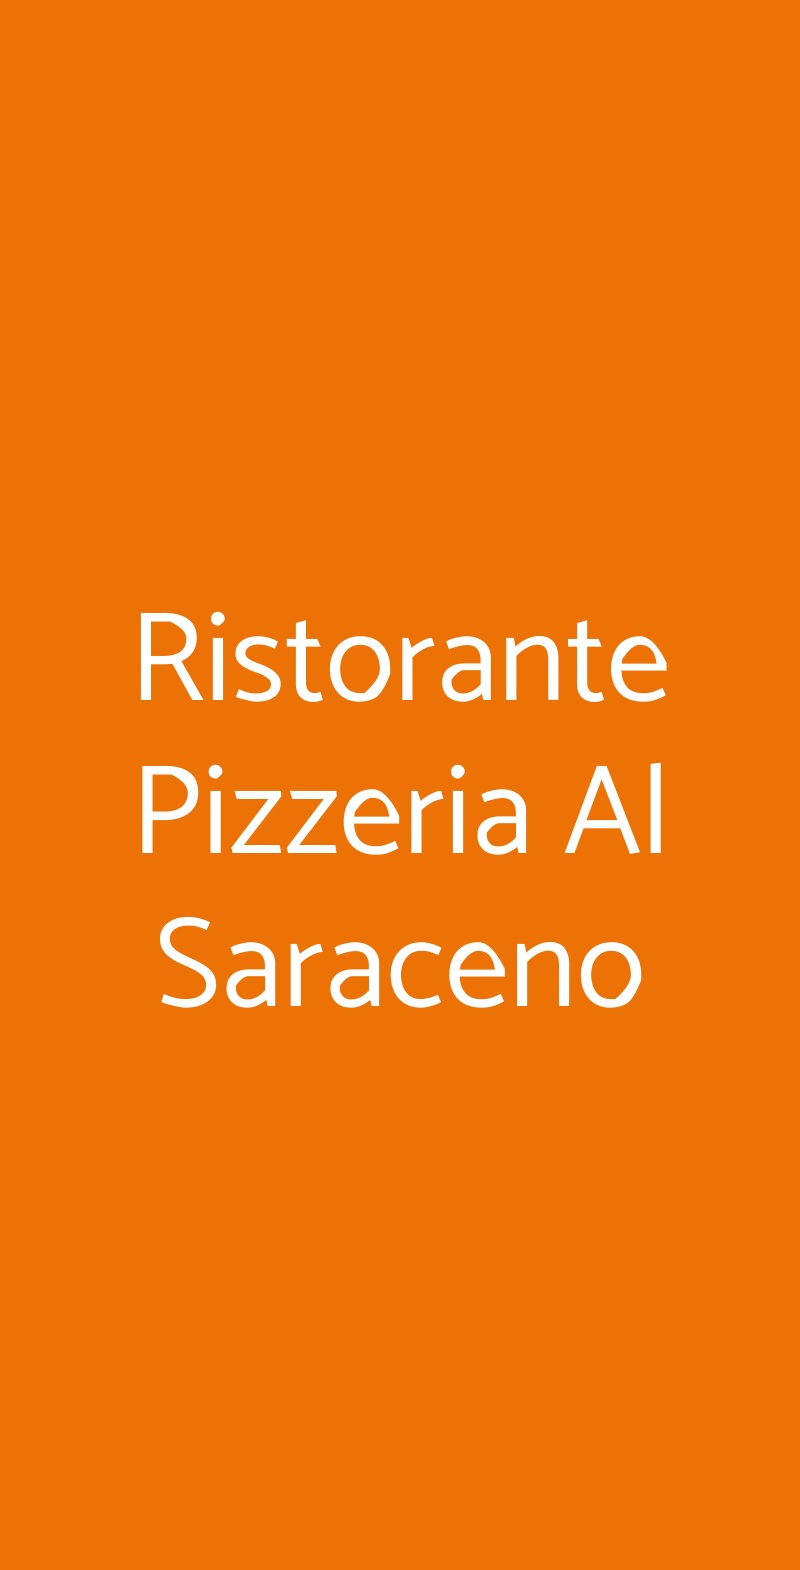 Ristorante Pizzeria Al Saraceno Padova menù 1 pagina